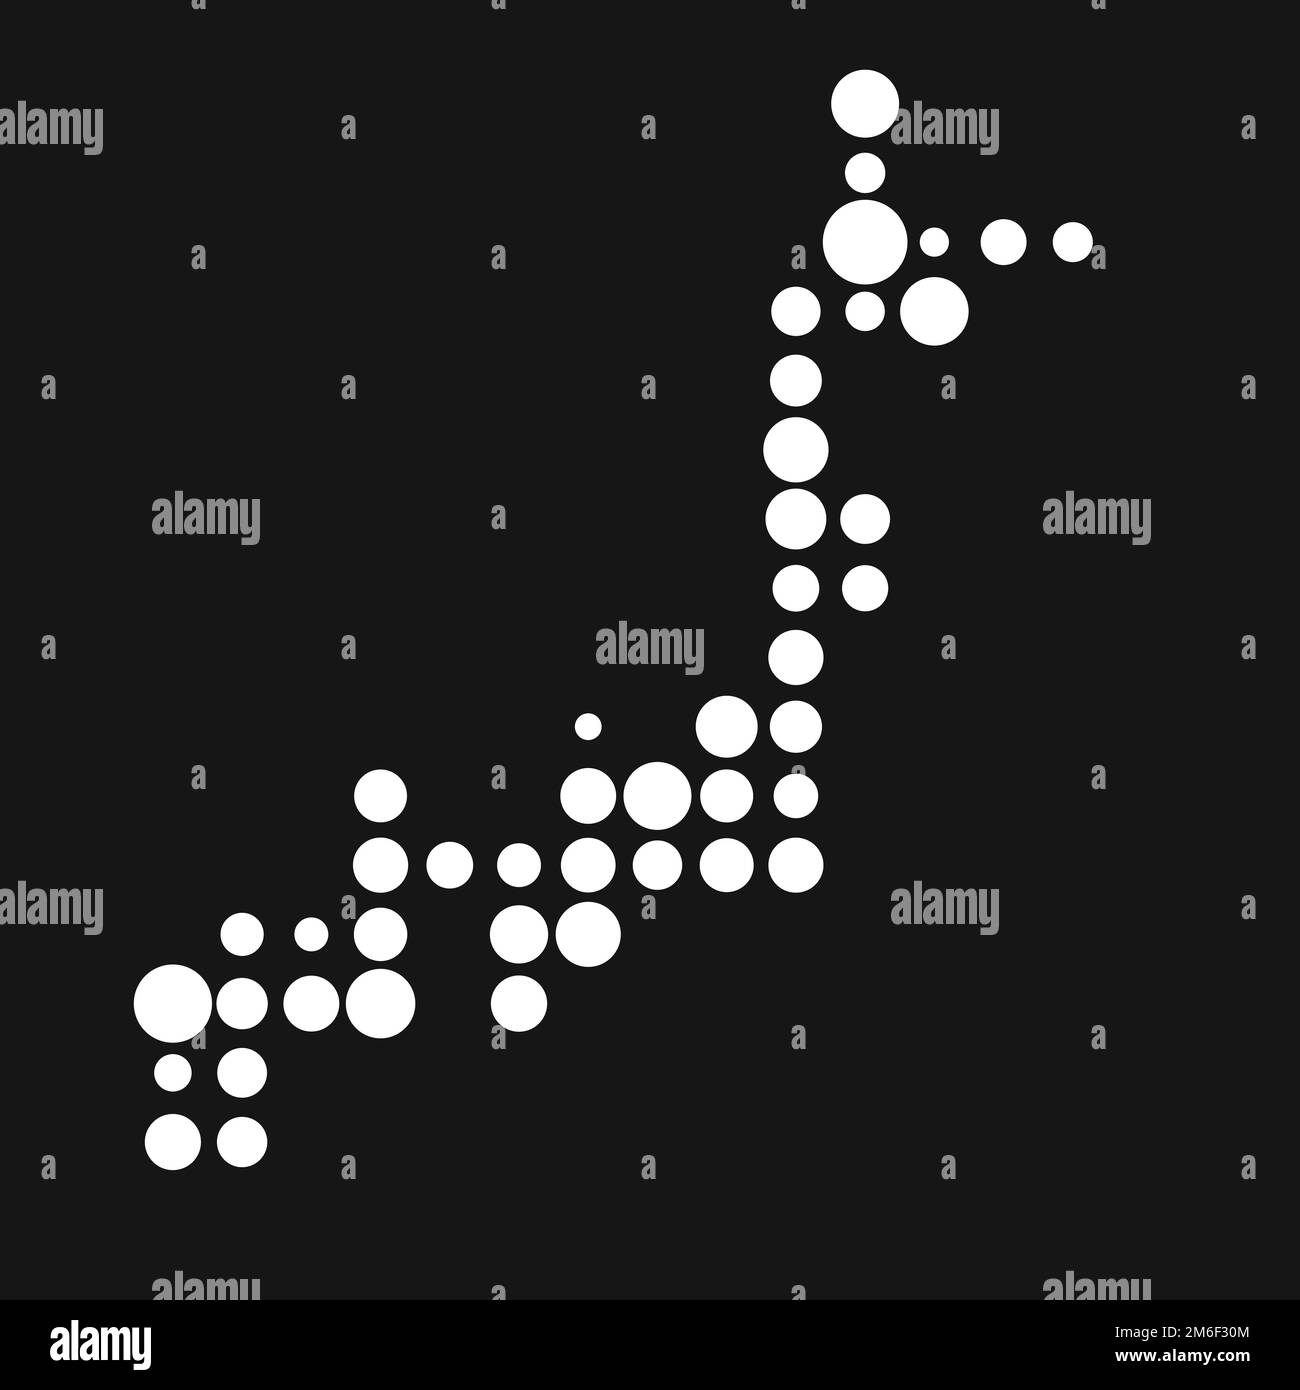 Verpixelte Darstellung des abgeleiteten Musters der japanischen Kartensilhouette Stock Vektor